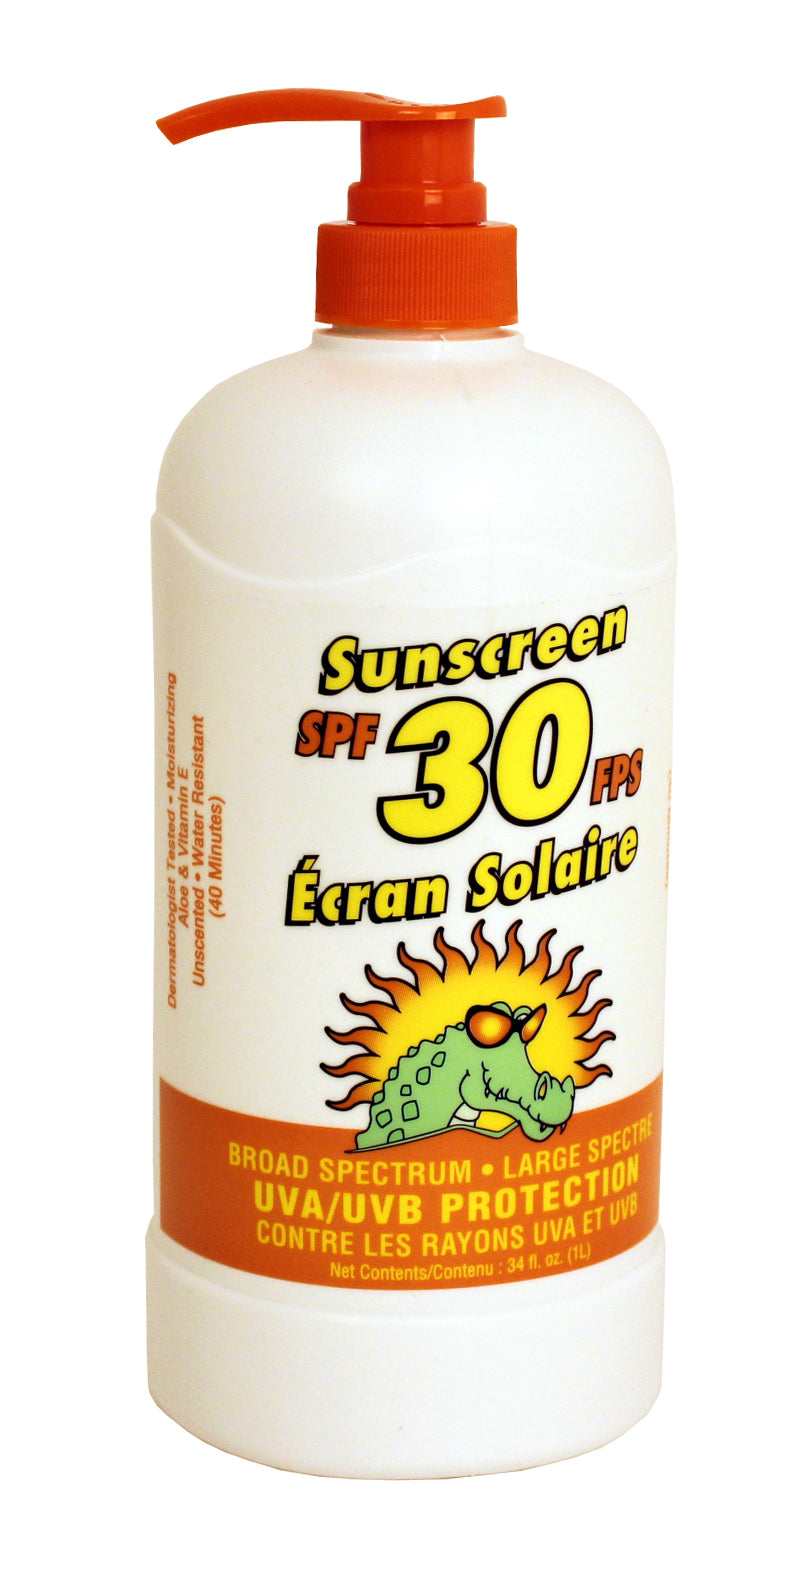 Croc Bloc Sunscreen SPF 30 with Pump, 1L Bottle